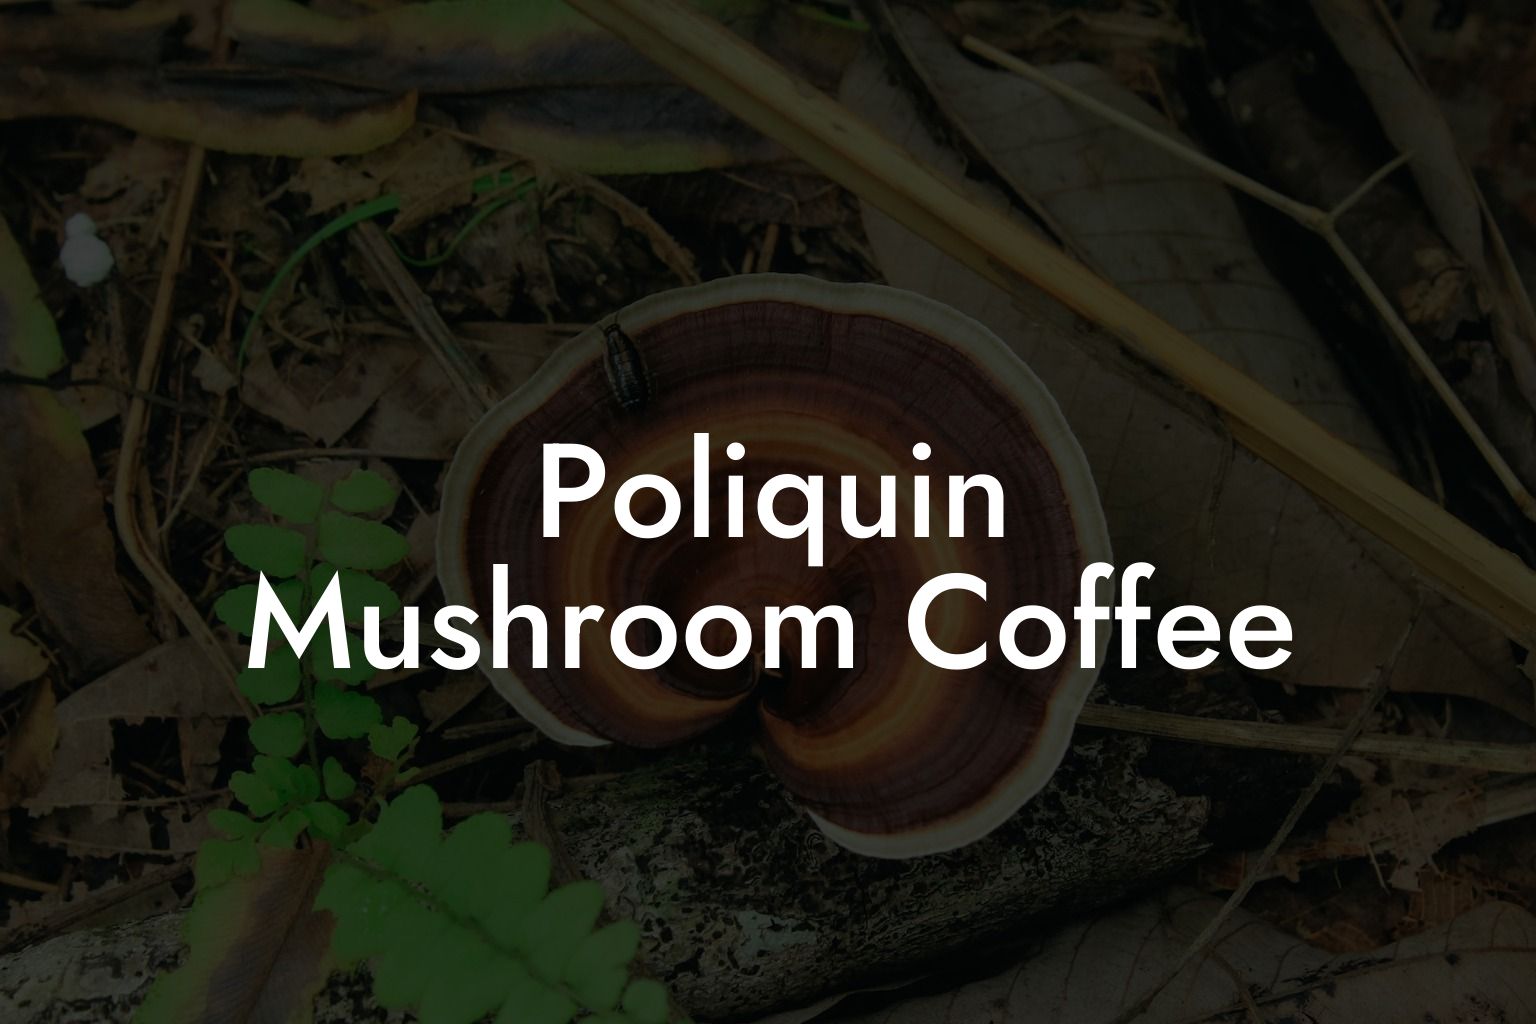 Poliquin Mushroom Coffee